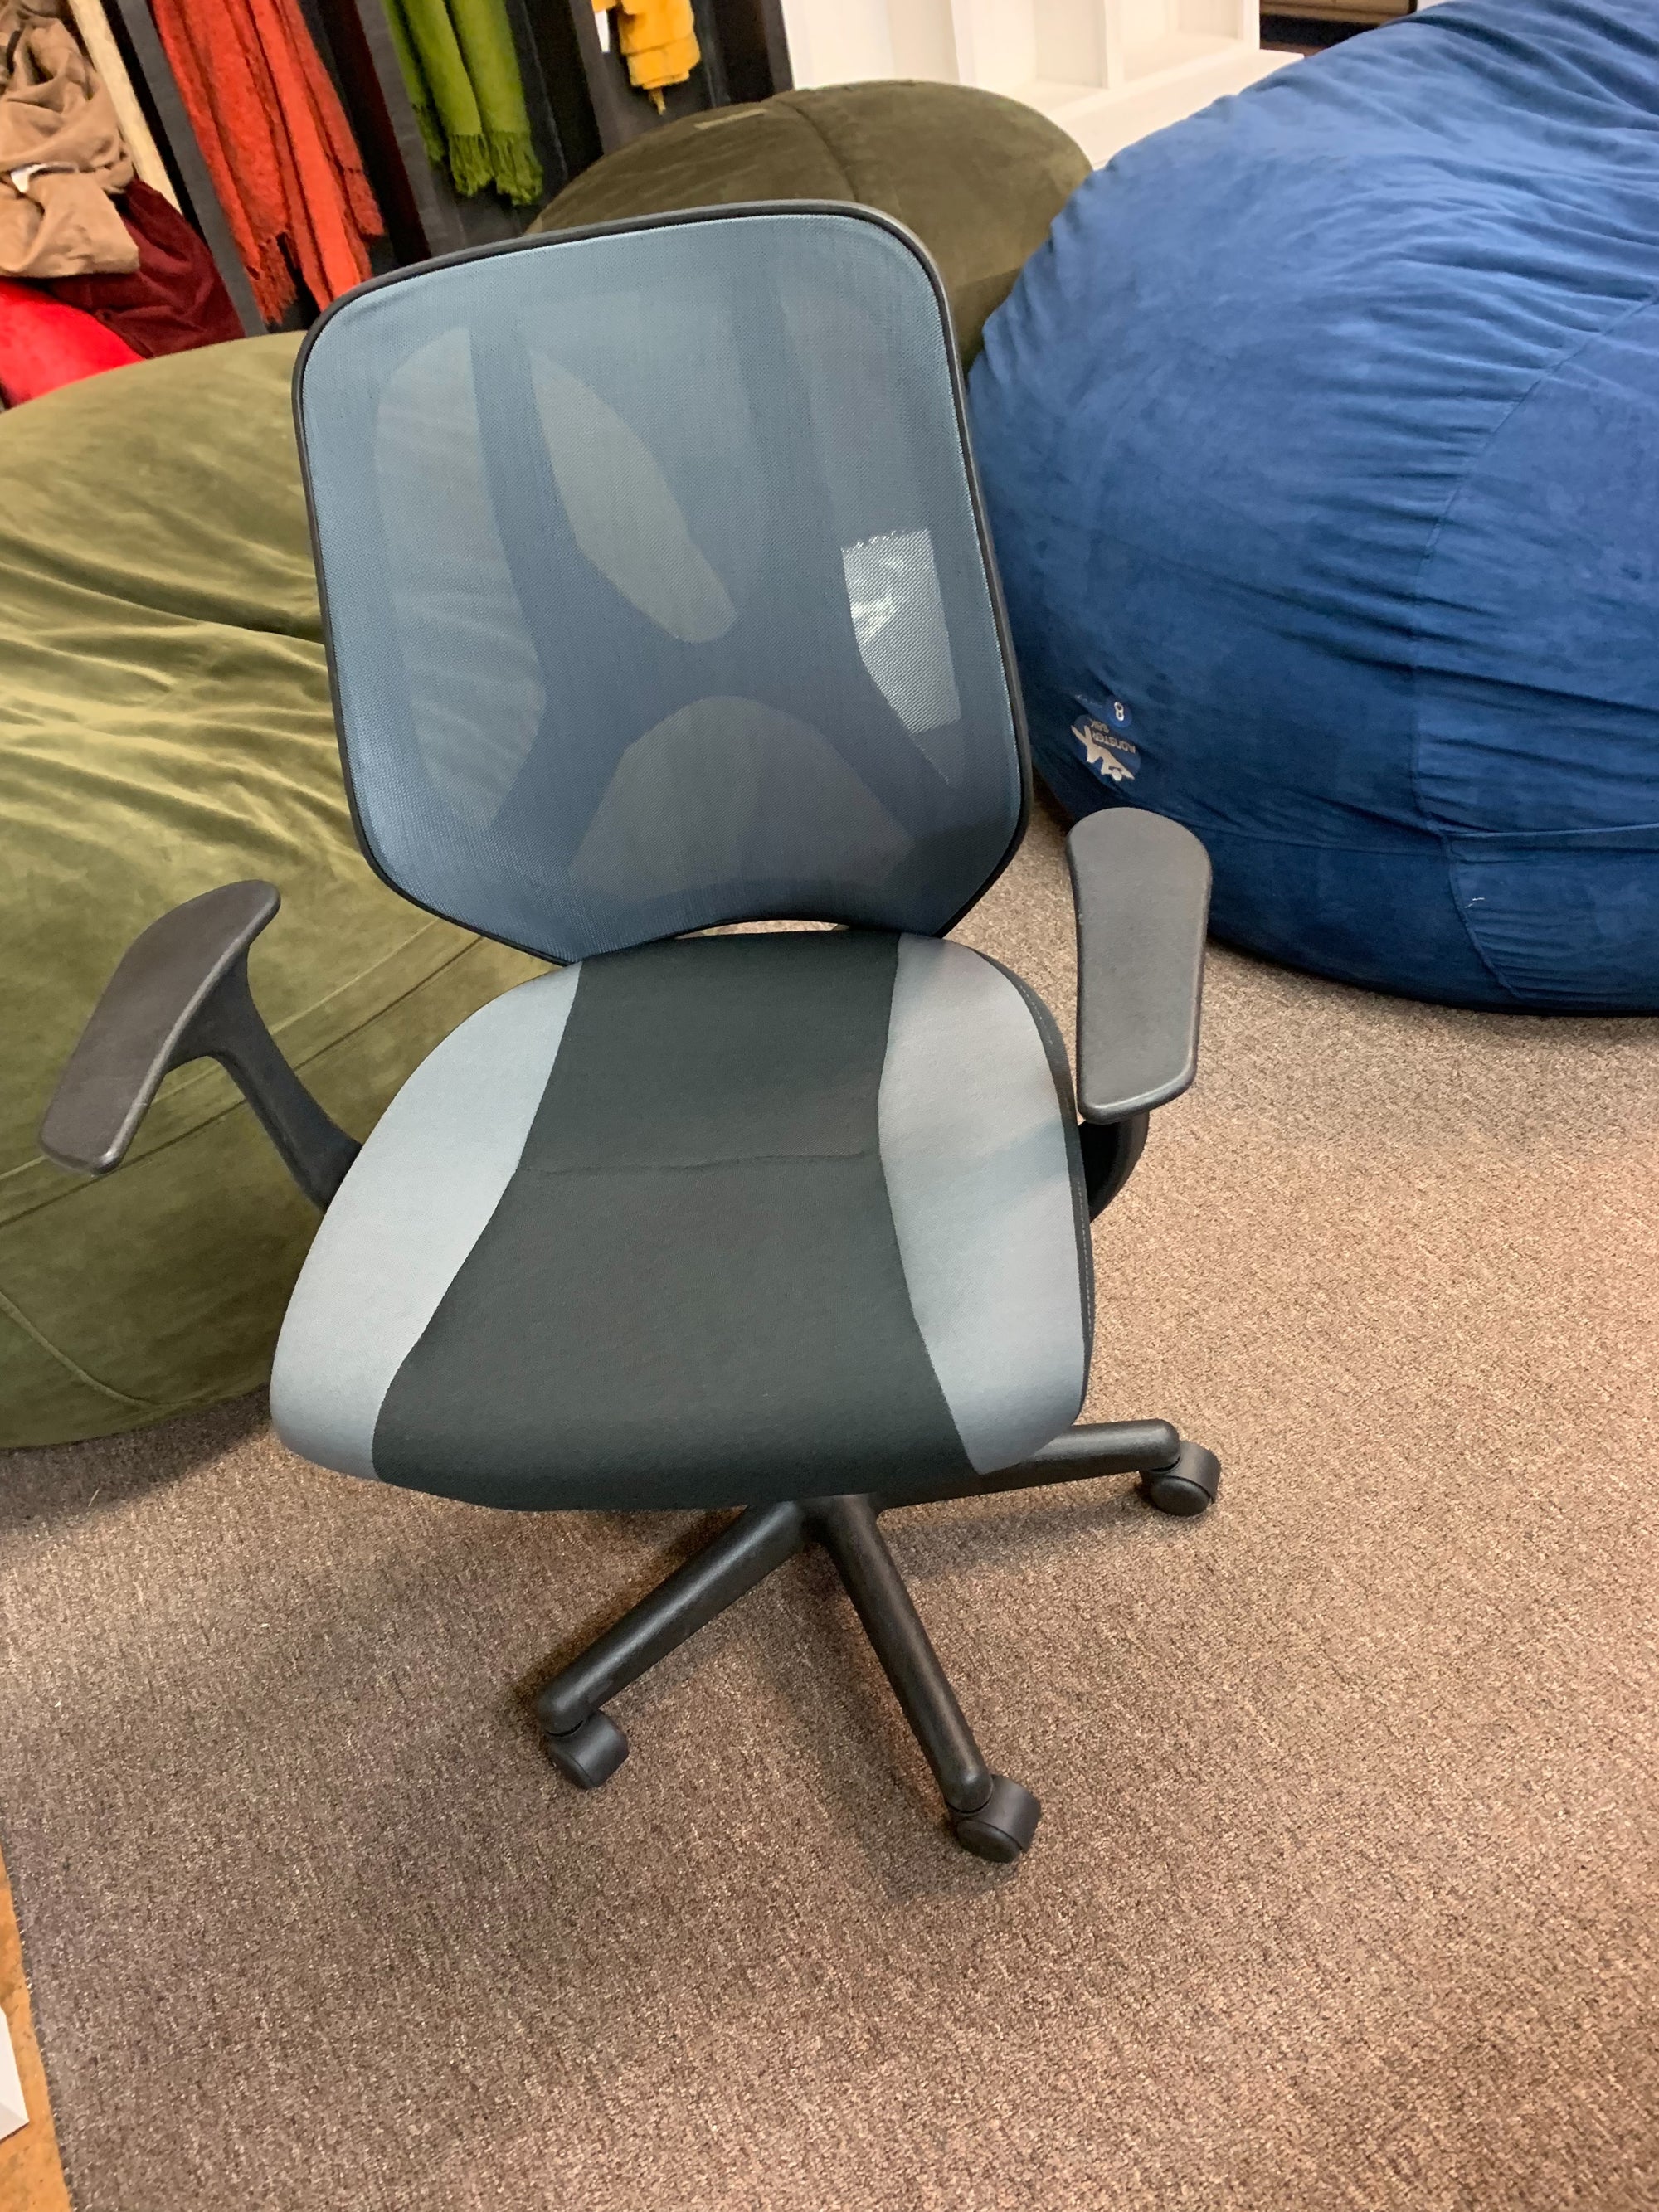 H201-10 FI-A Home Office Swivel Desk Chair